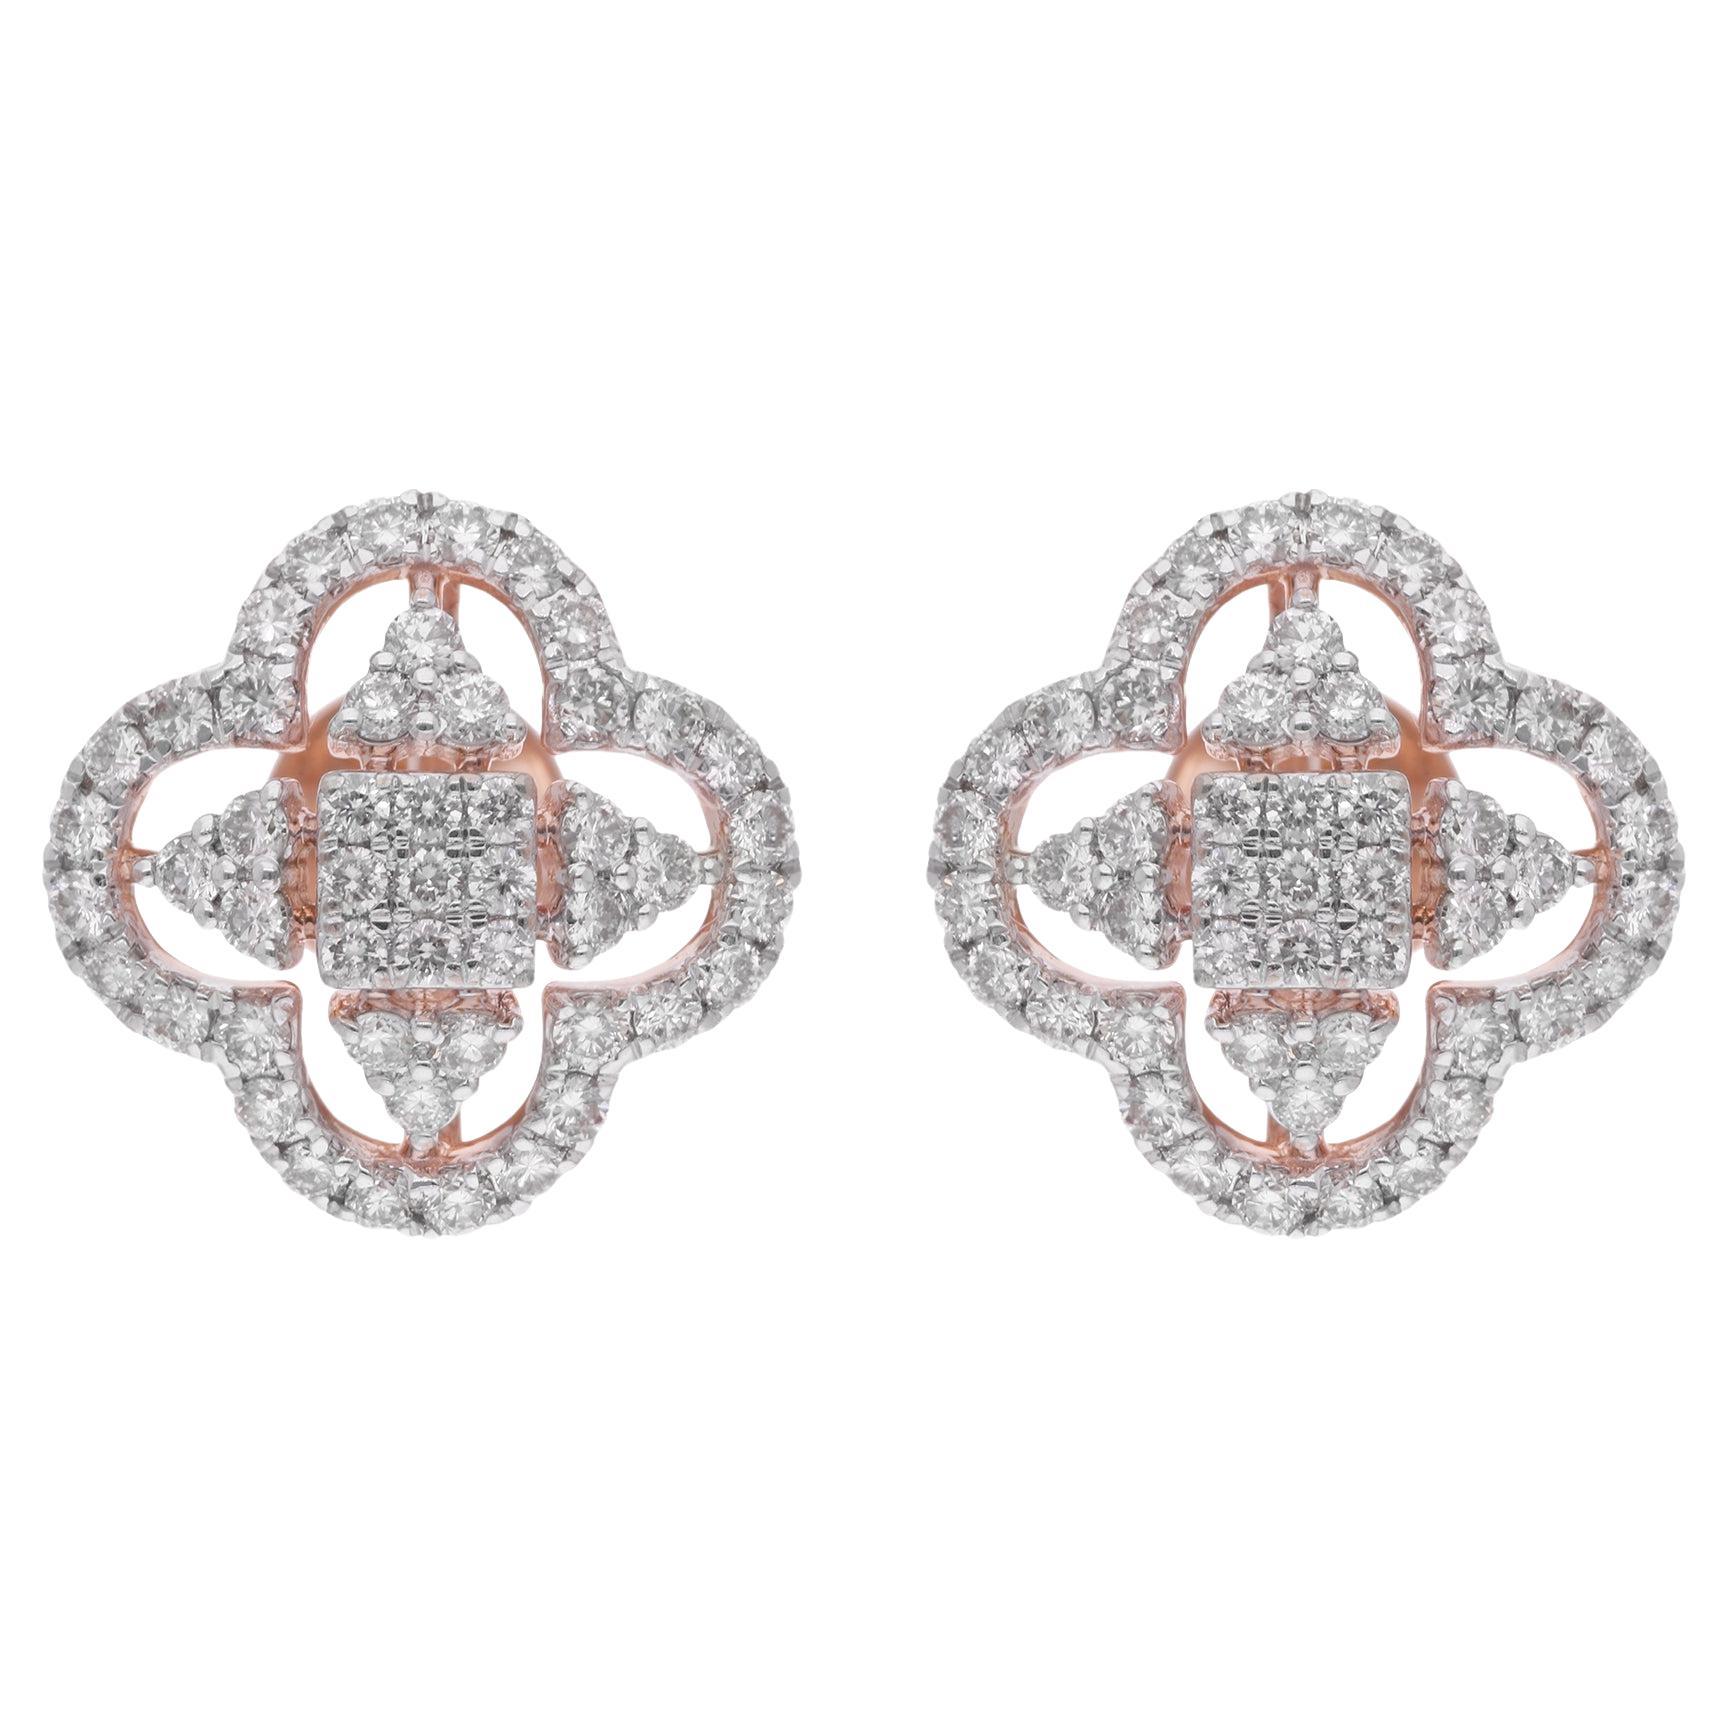 1.10 Carat Natural Diamond Pave Clover Design Stud Earrings 18 Karat Rose Gold